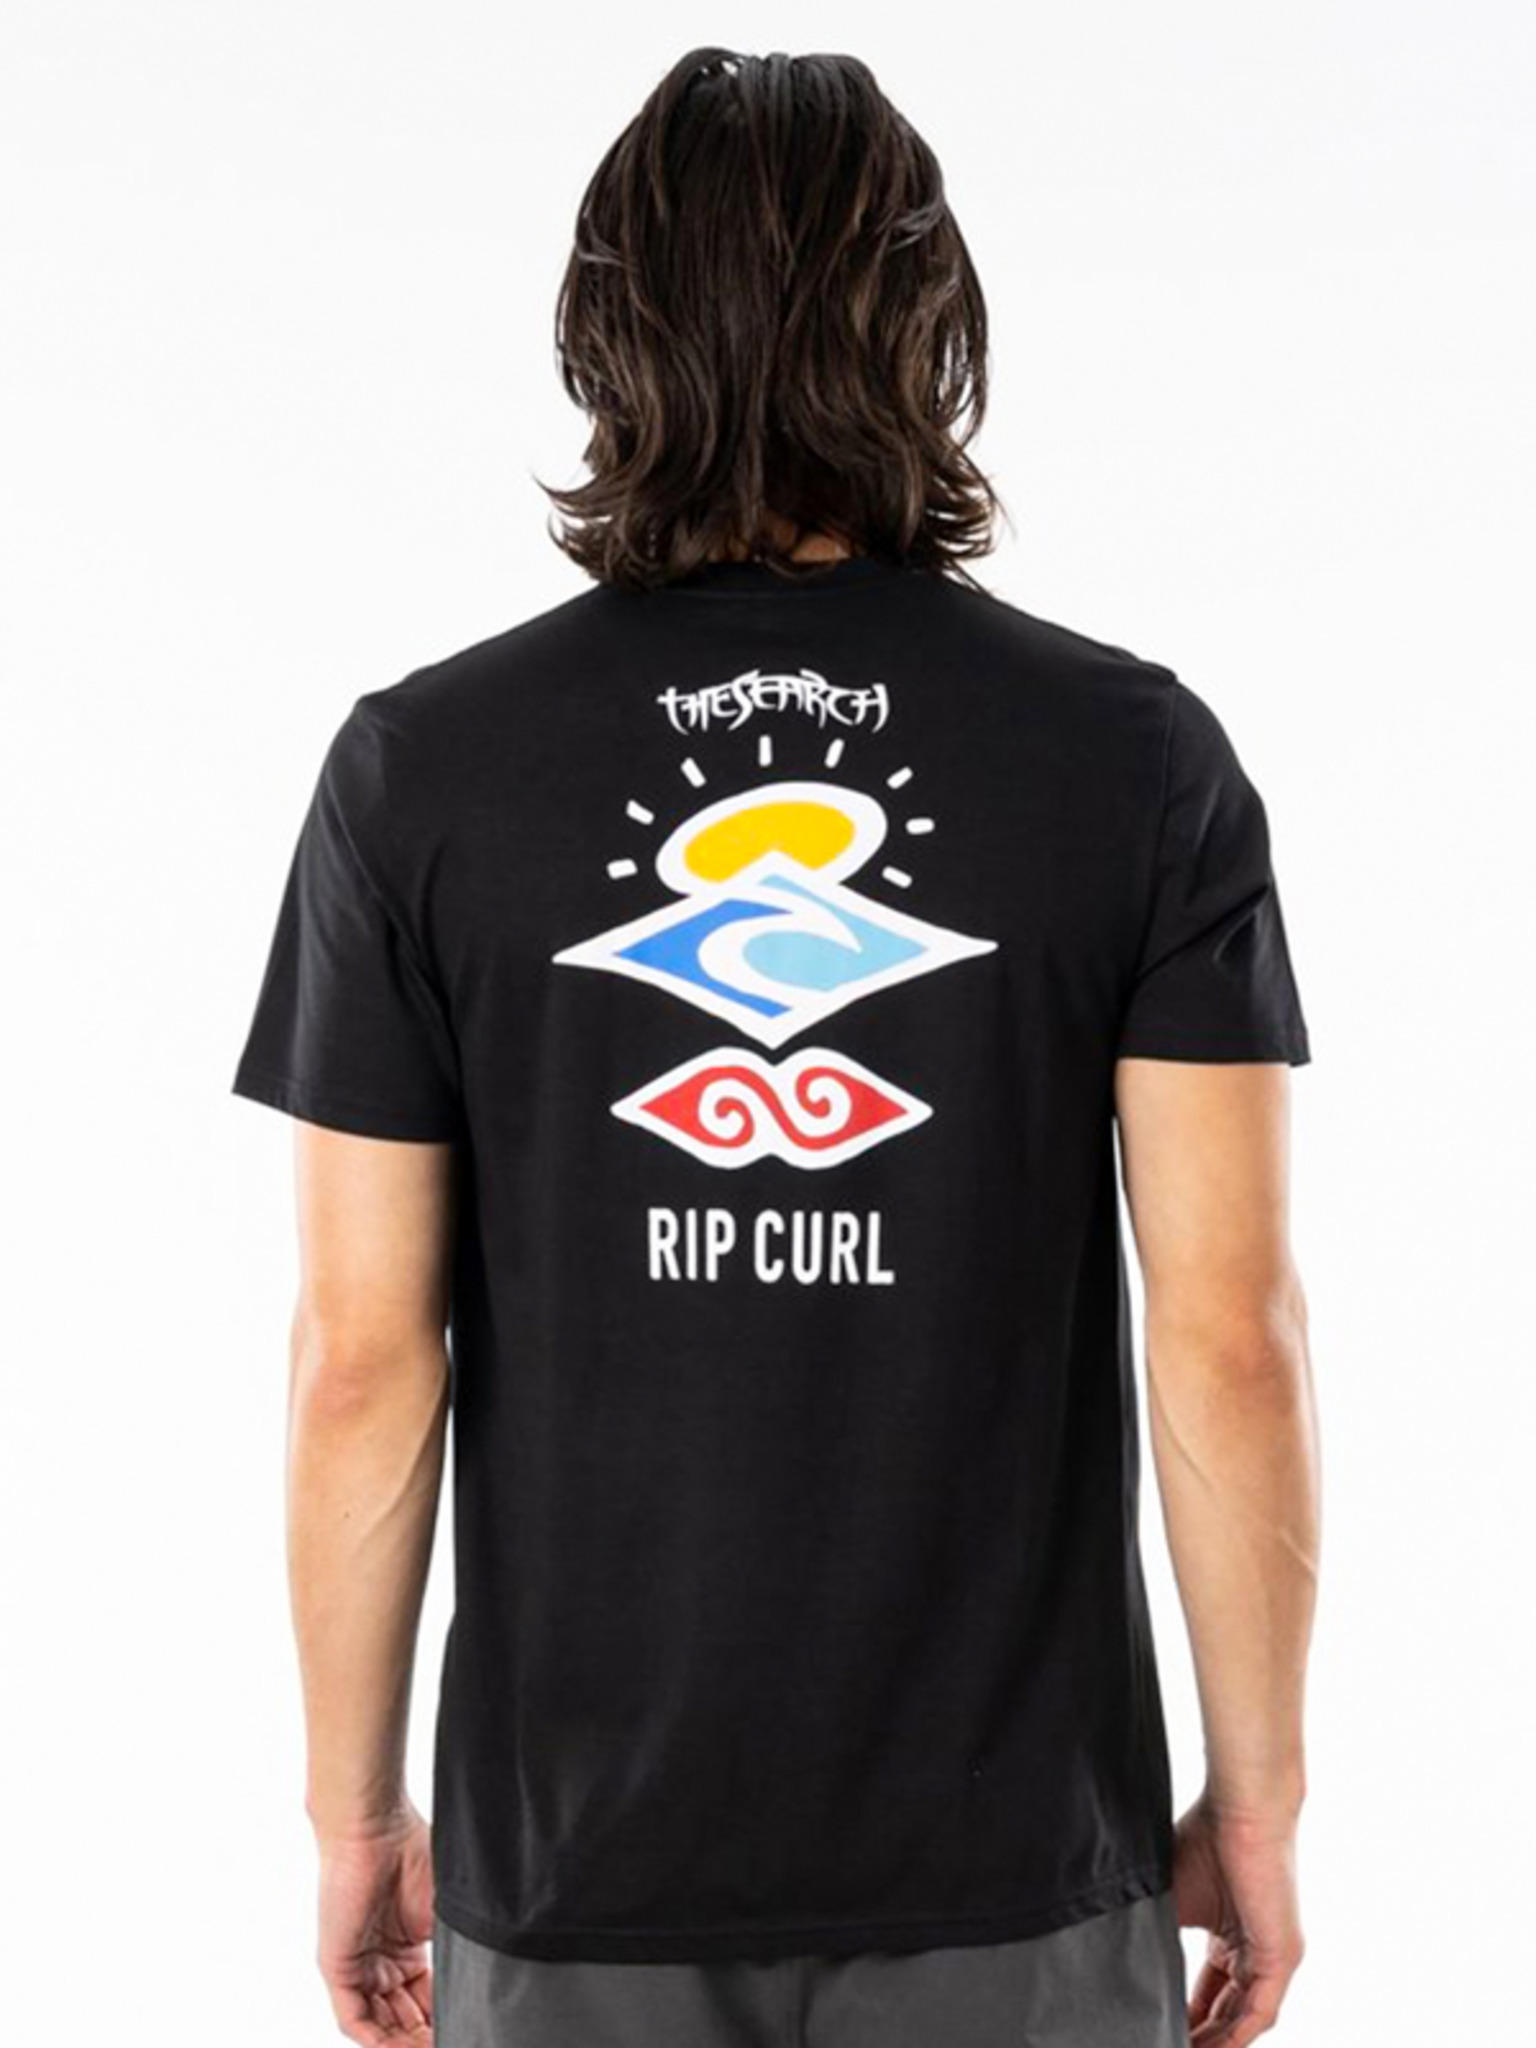 Rip Curl - T-shirt Bibloo.com